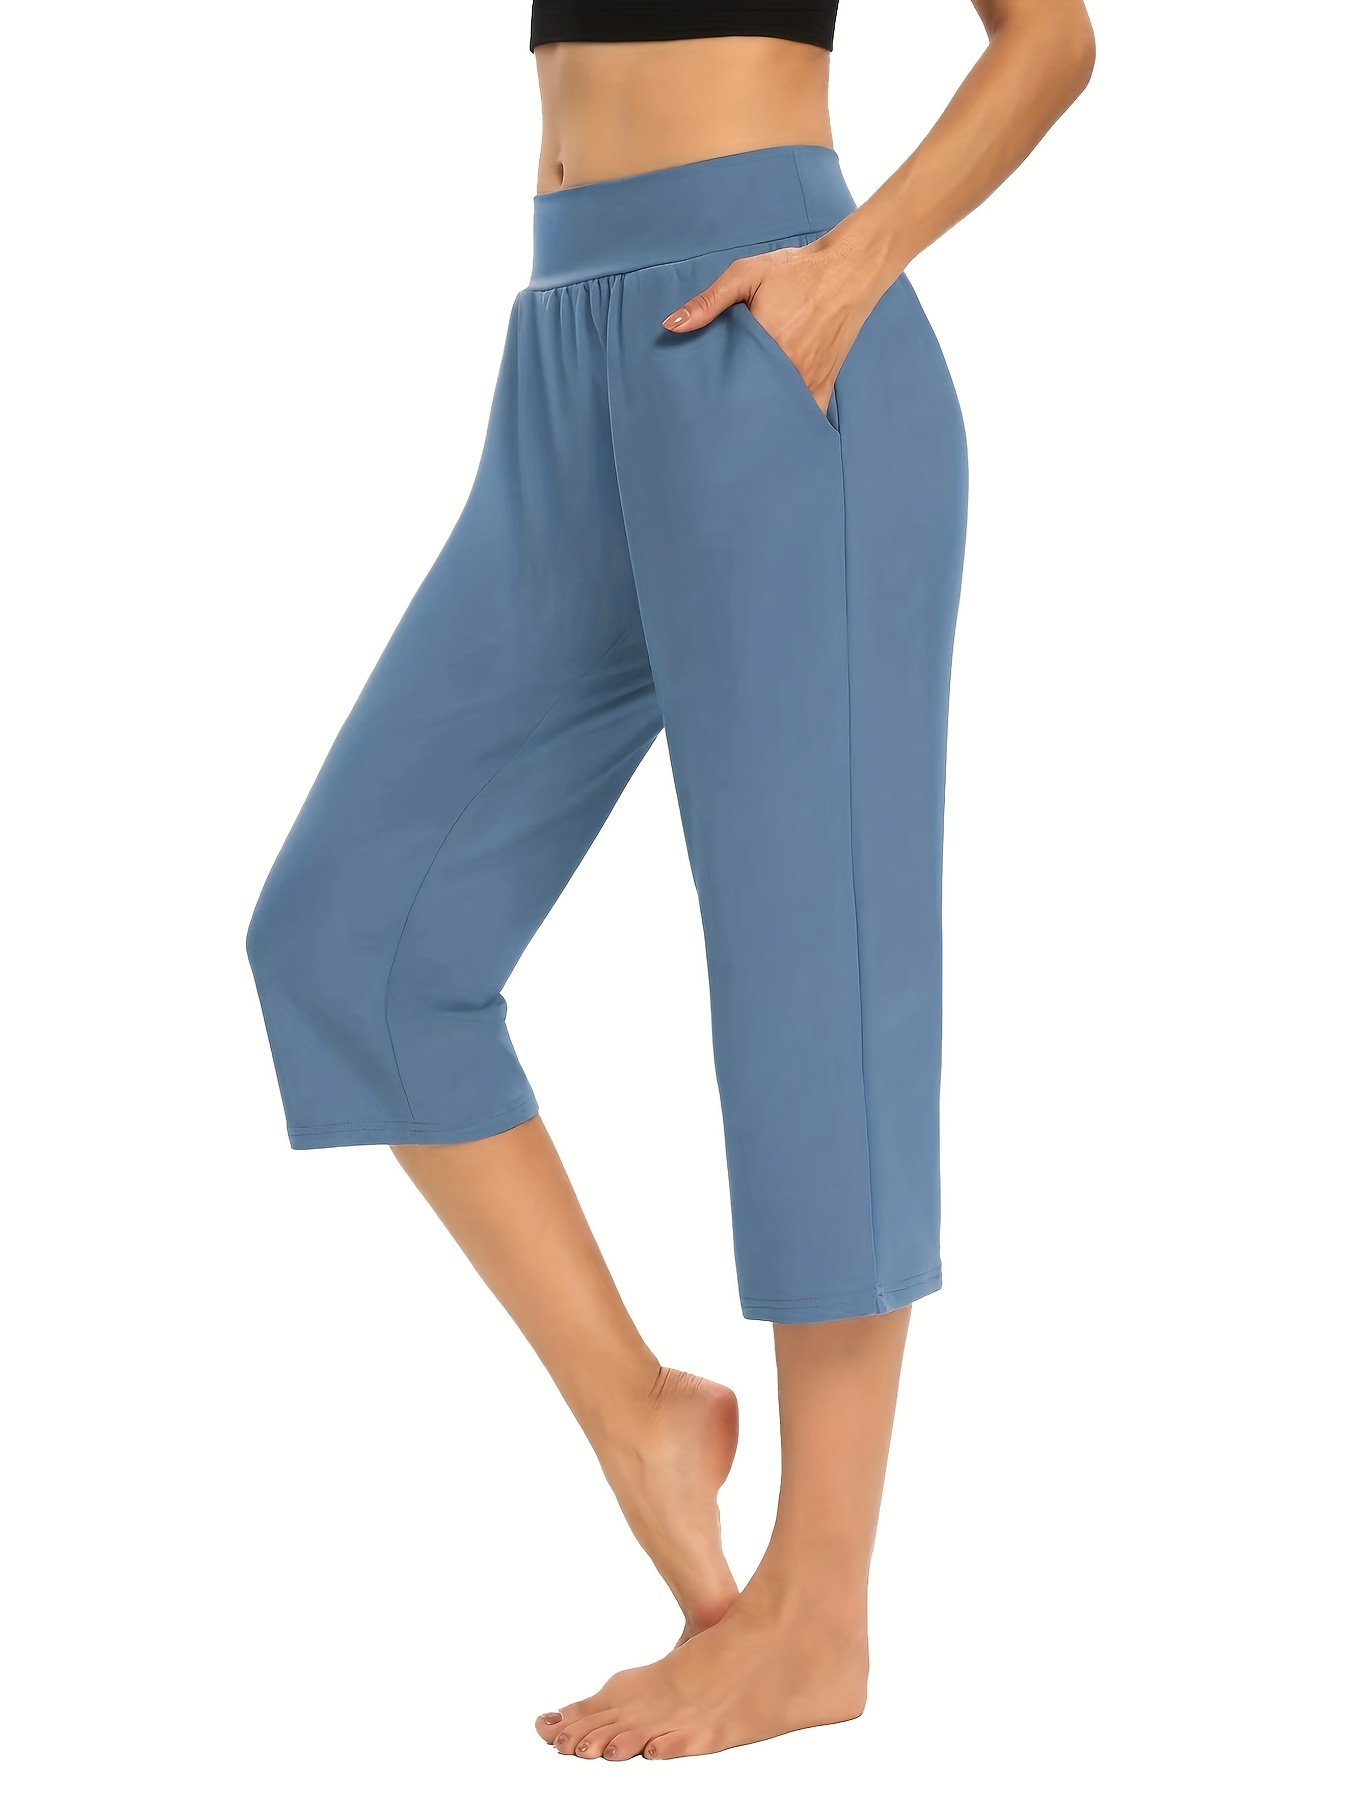 Harem Pants for Women UK Summer Casual Cropped Work Capri Pants